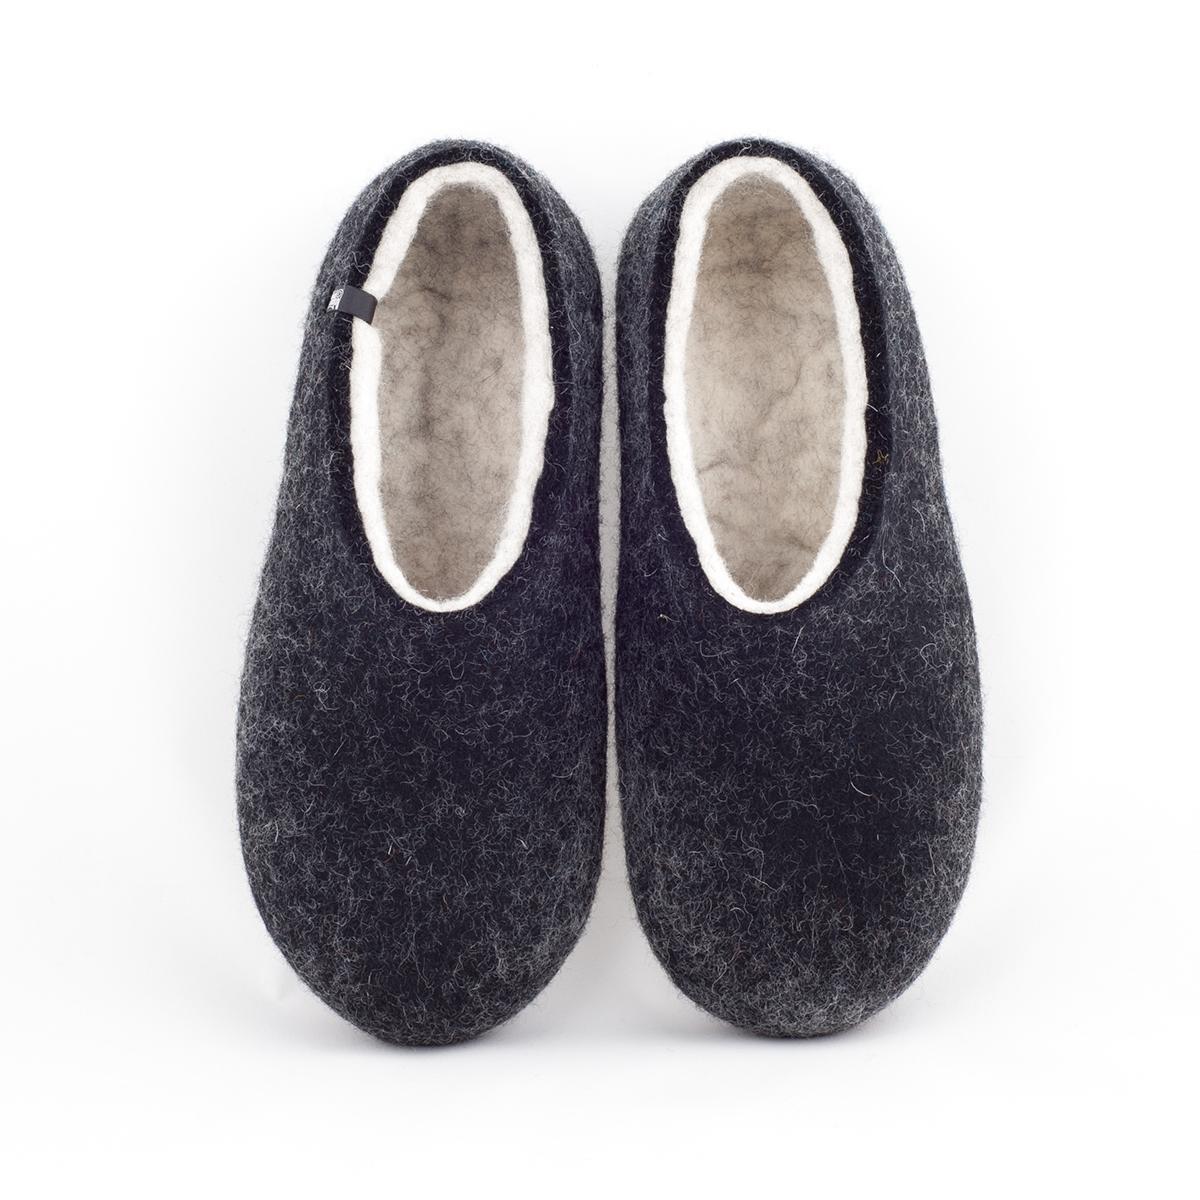 House slippers DUAL BLACK white Women's Slippers, Women's Slippers, DUAL BLACK